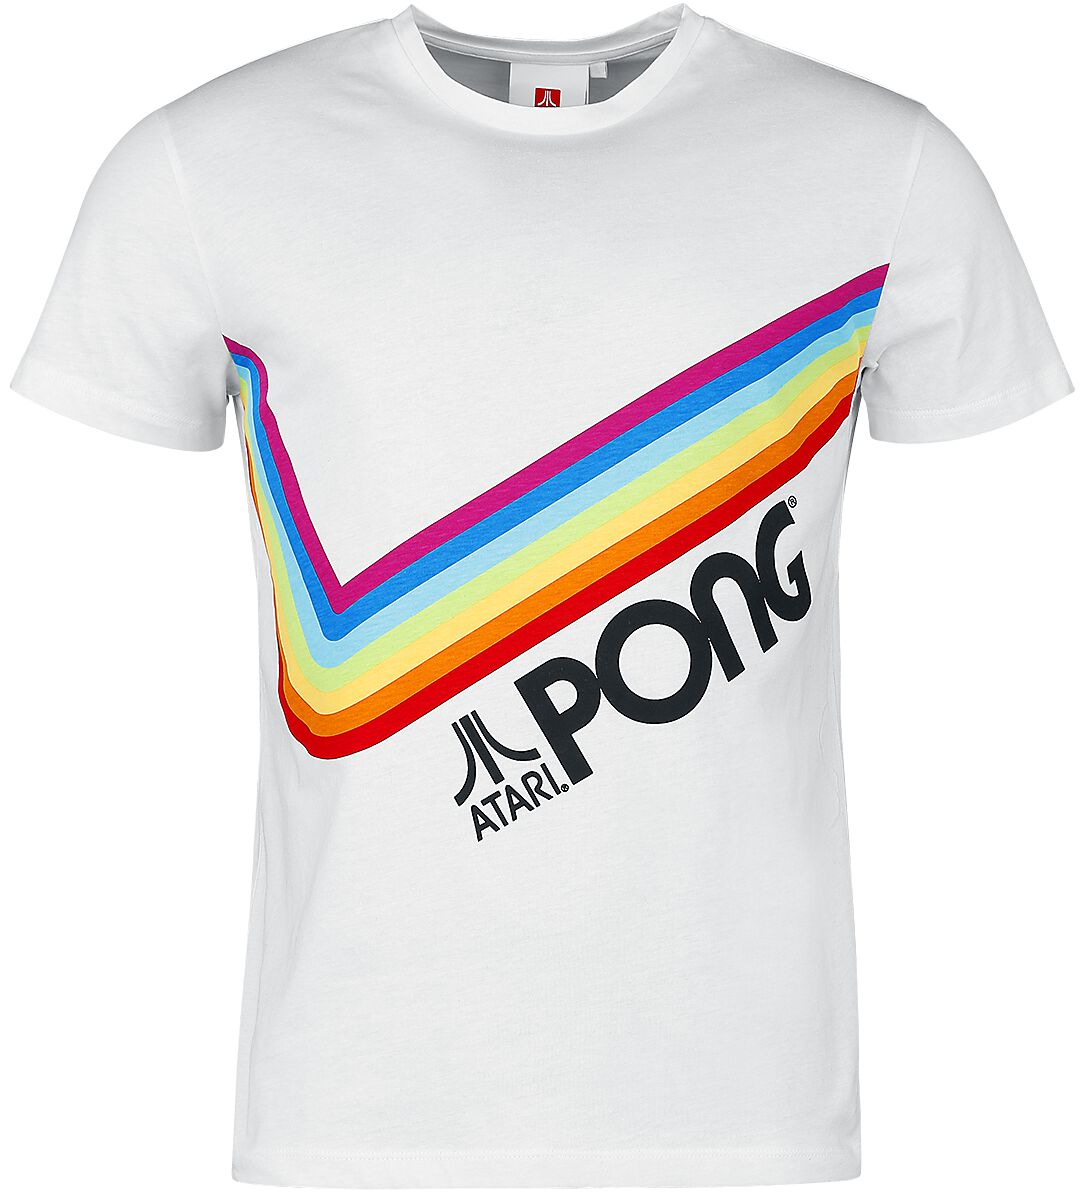 Atari Pong - Pride Rainbow T-Shirt weiß in L